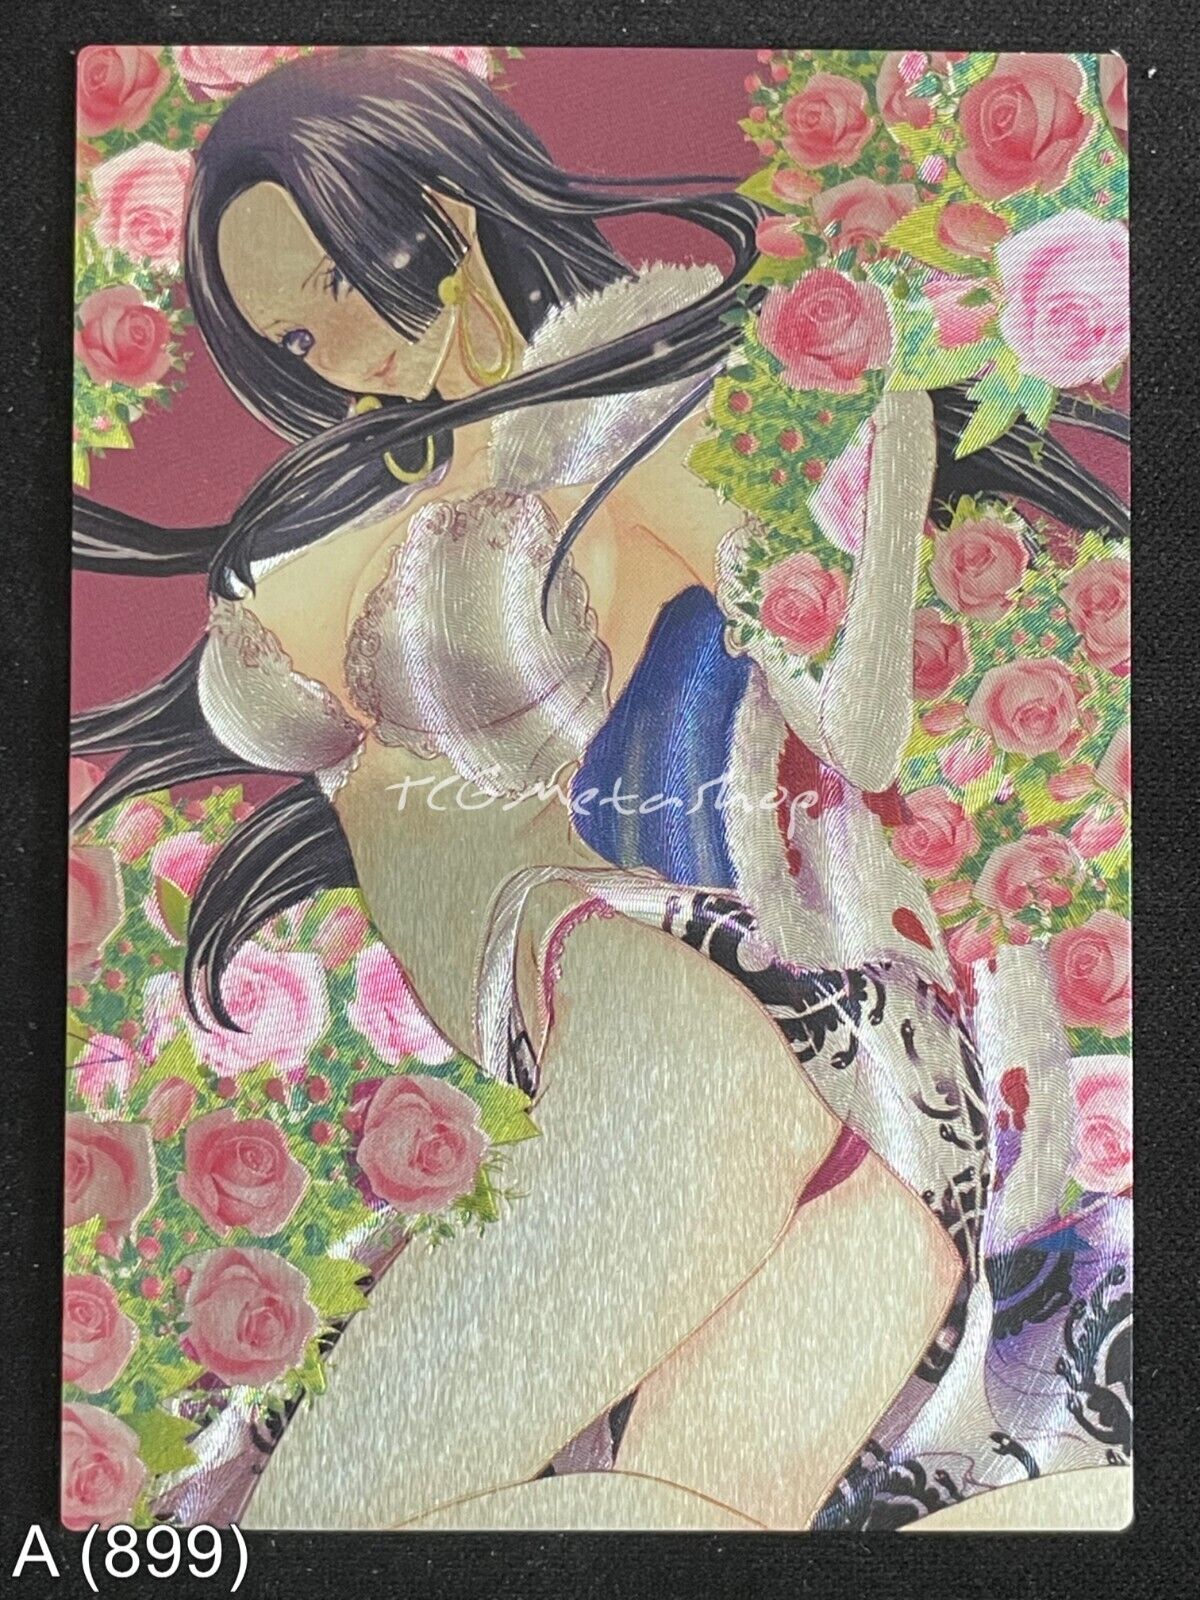 🔥 A 899 Boa Hancock One Piece Goddess Story Anime Waifu Card ACG 🔥